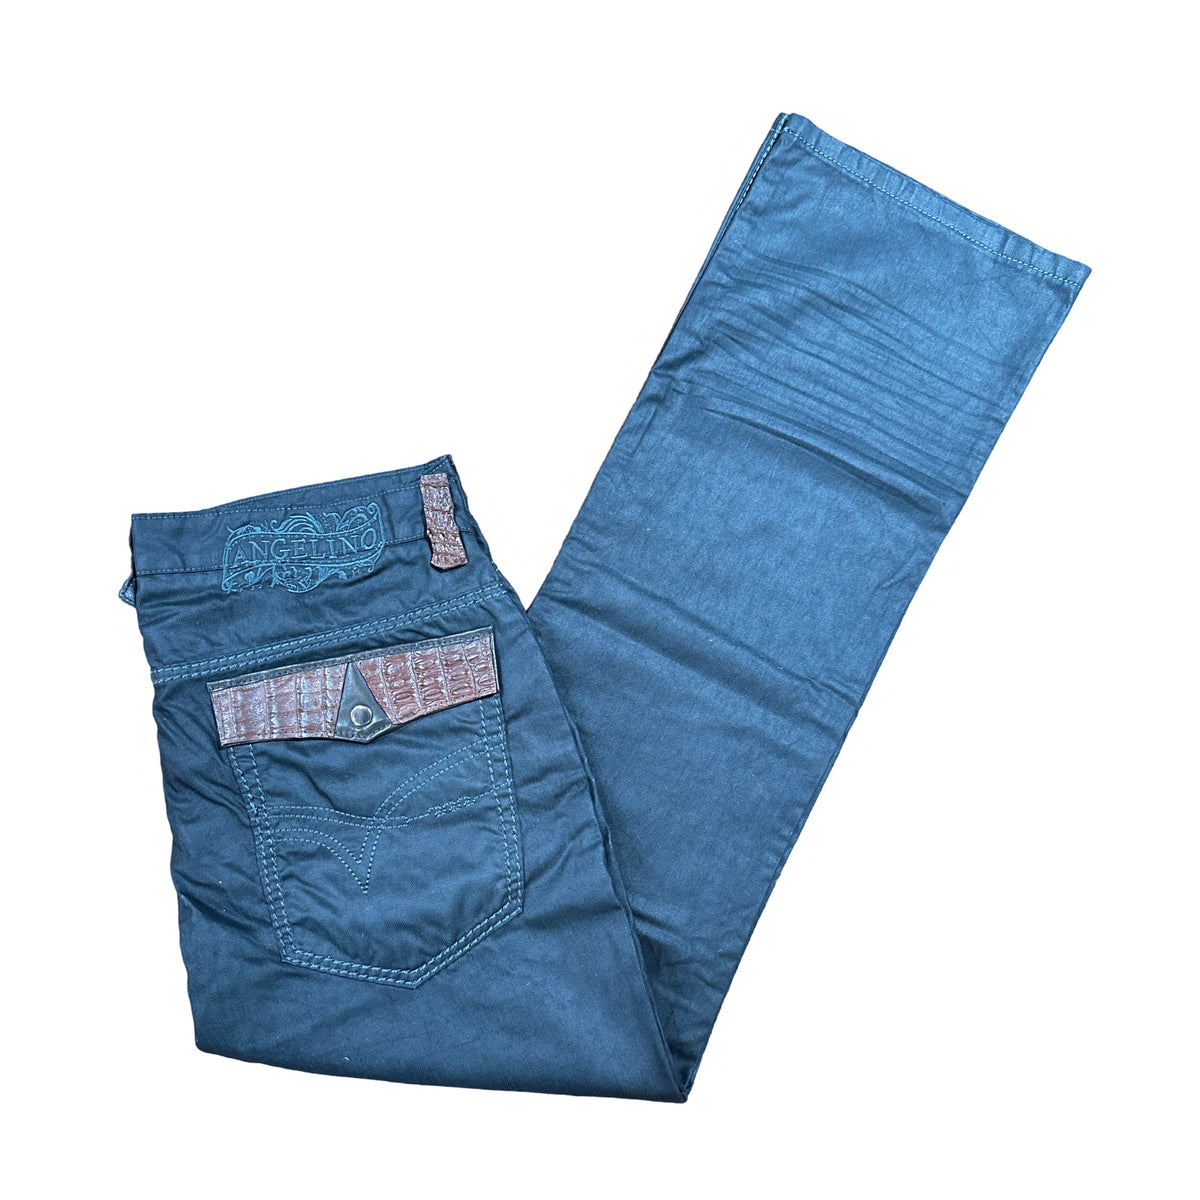 Kashani x Angelino Jeans w/ Brown Alligator Pocket Flaps